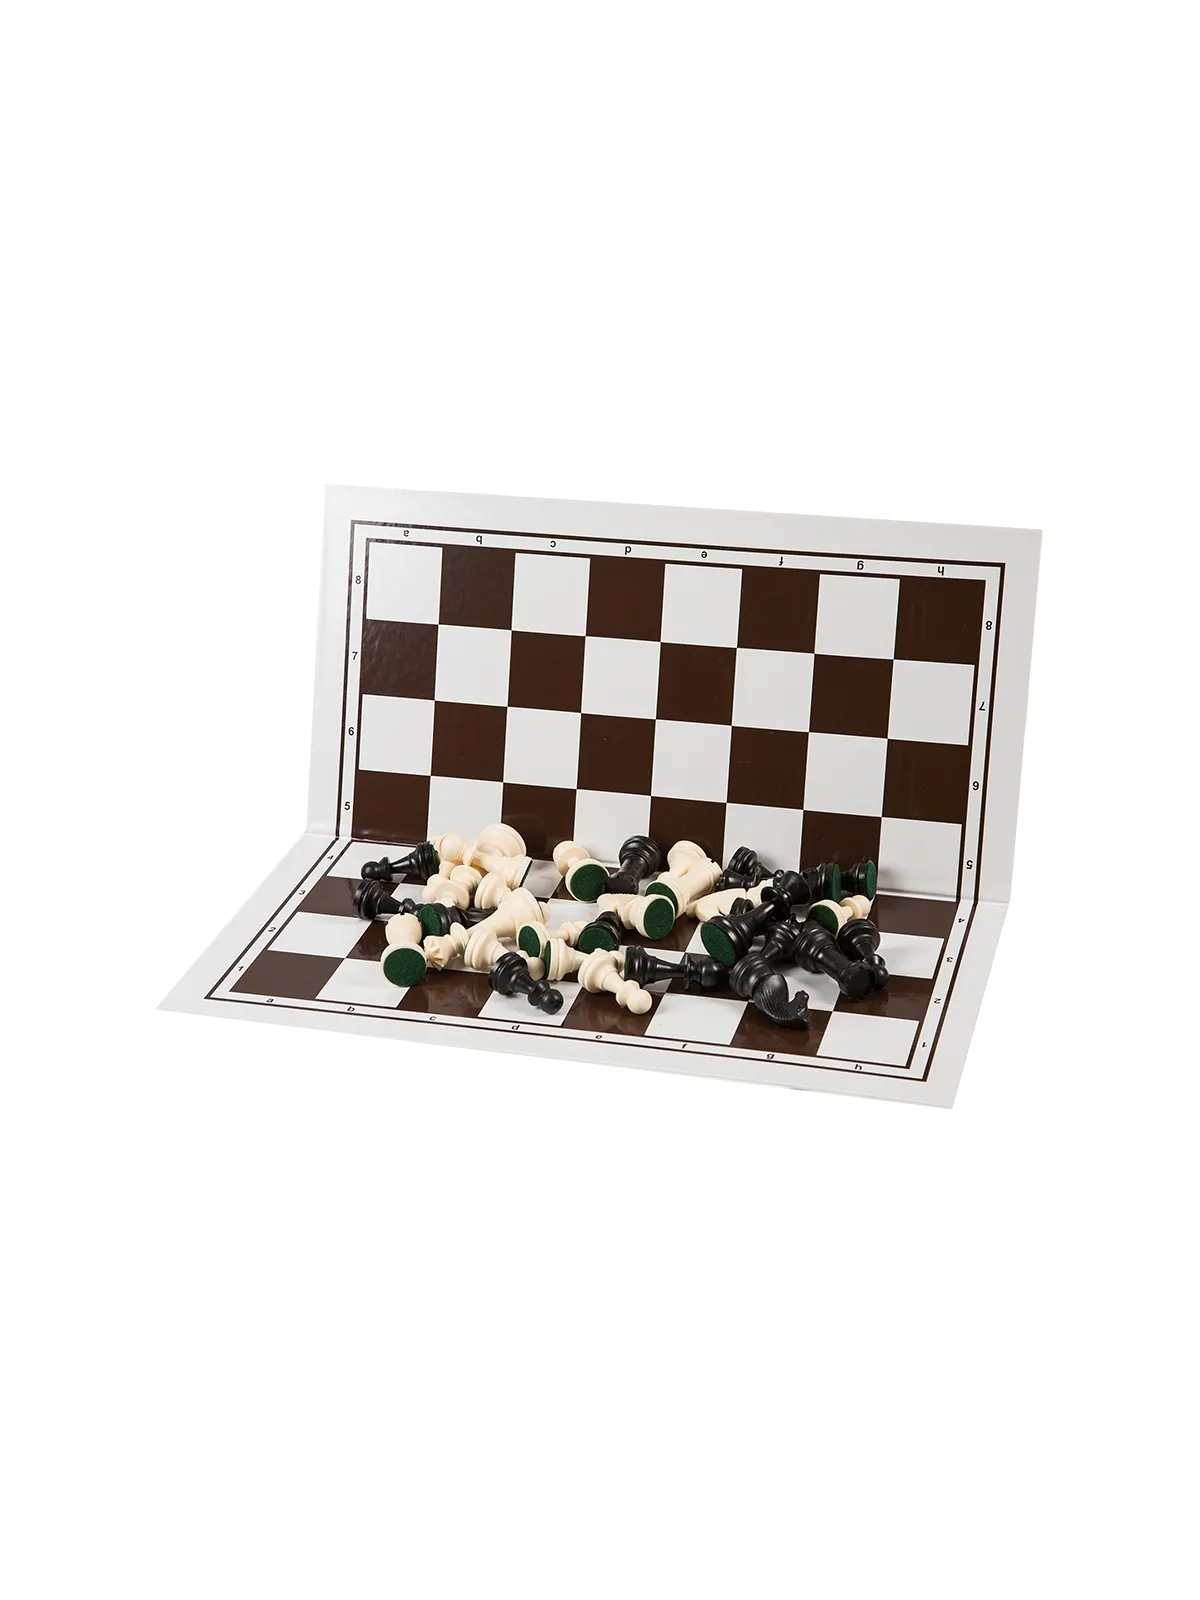 Chessboard - Plastic